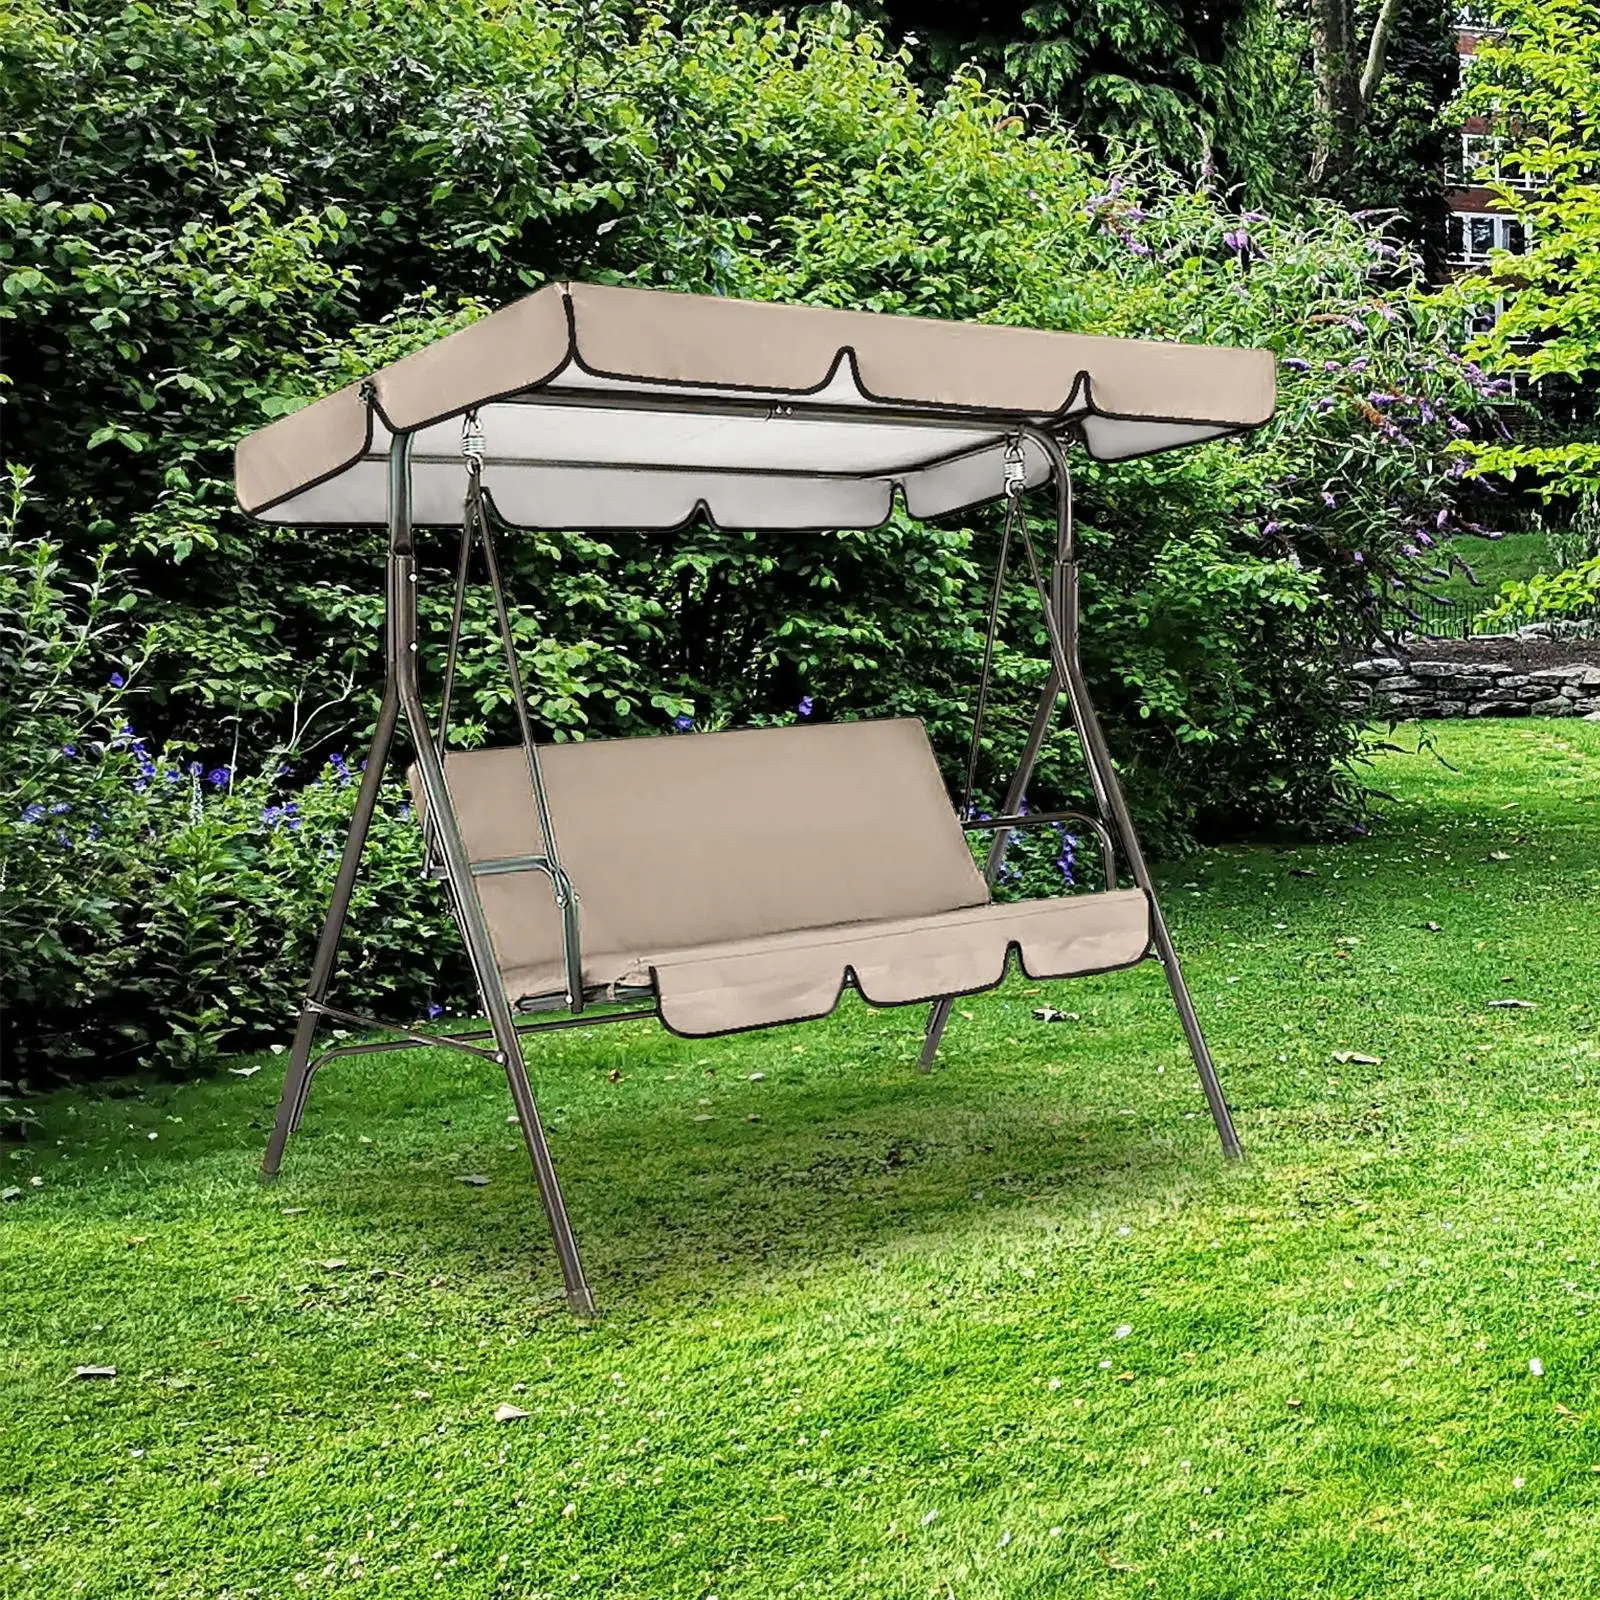 Patio Swing Canopy Garden Hammock Top Cover with Swing Cushion Cover Swing Seat Top Cover for Furniture Patio Canopy Yard Garden